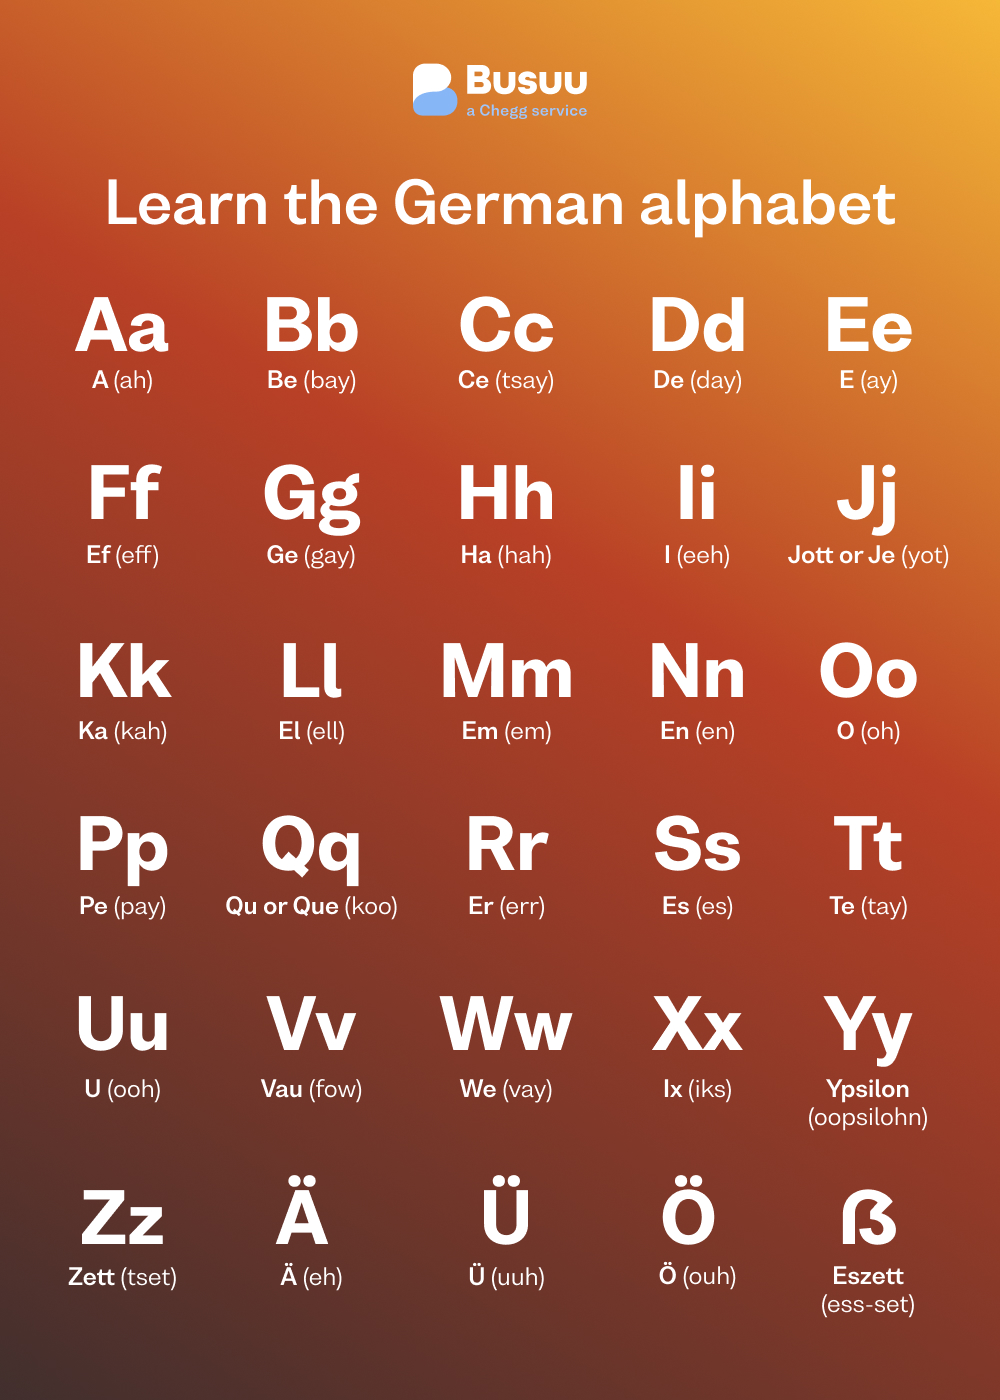 German alphabet chart, courtesy of language-learning app Busuu's German alphabet guide